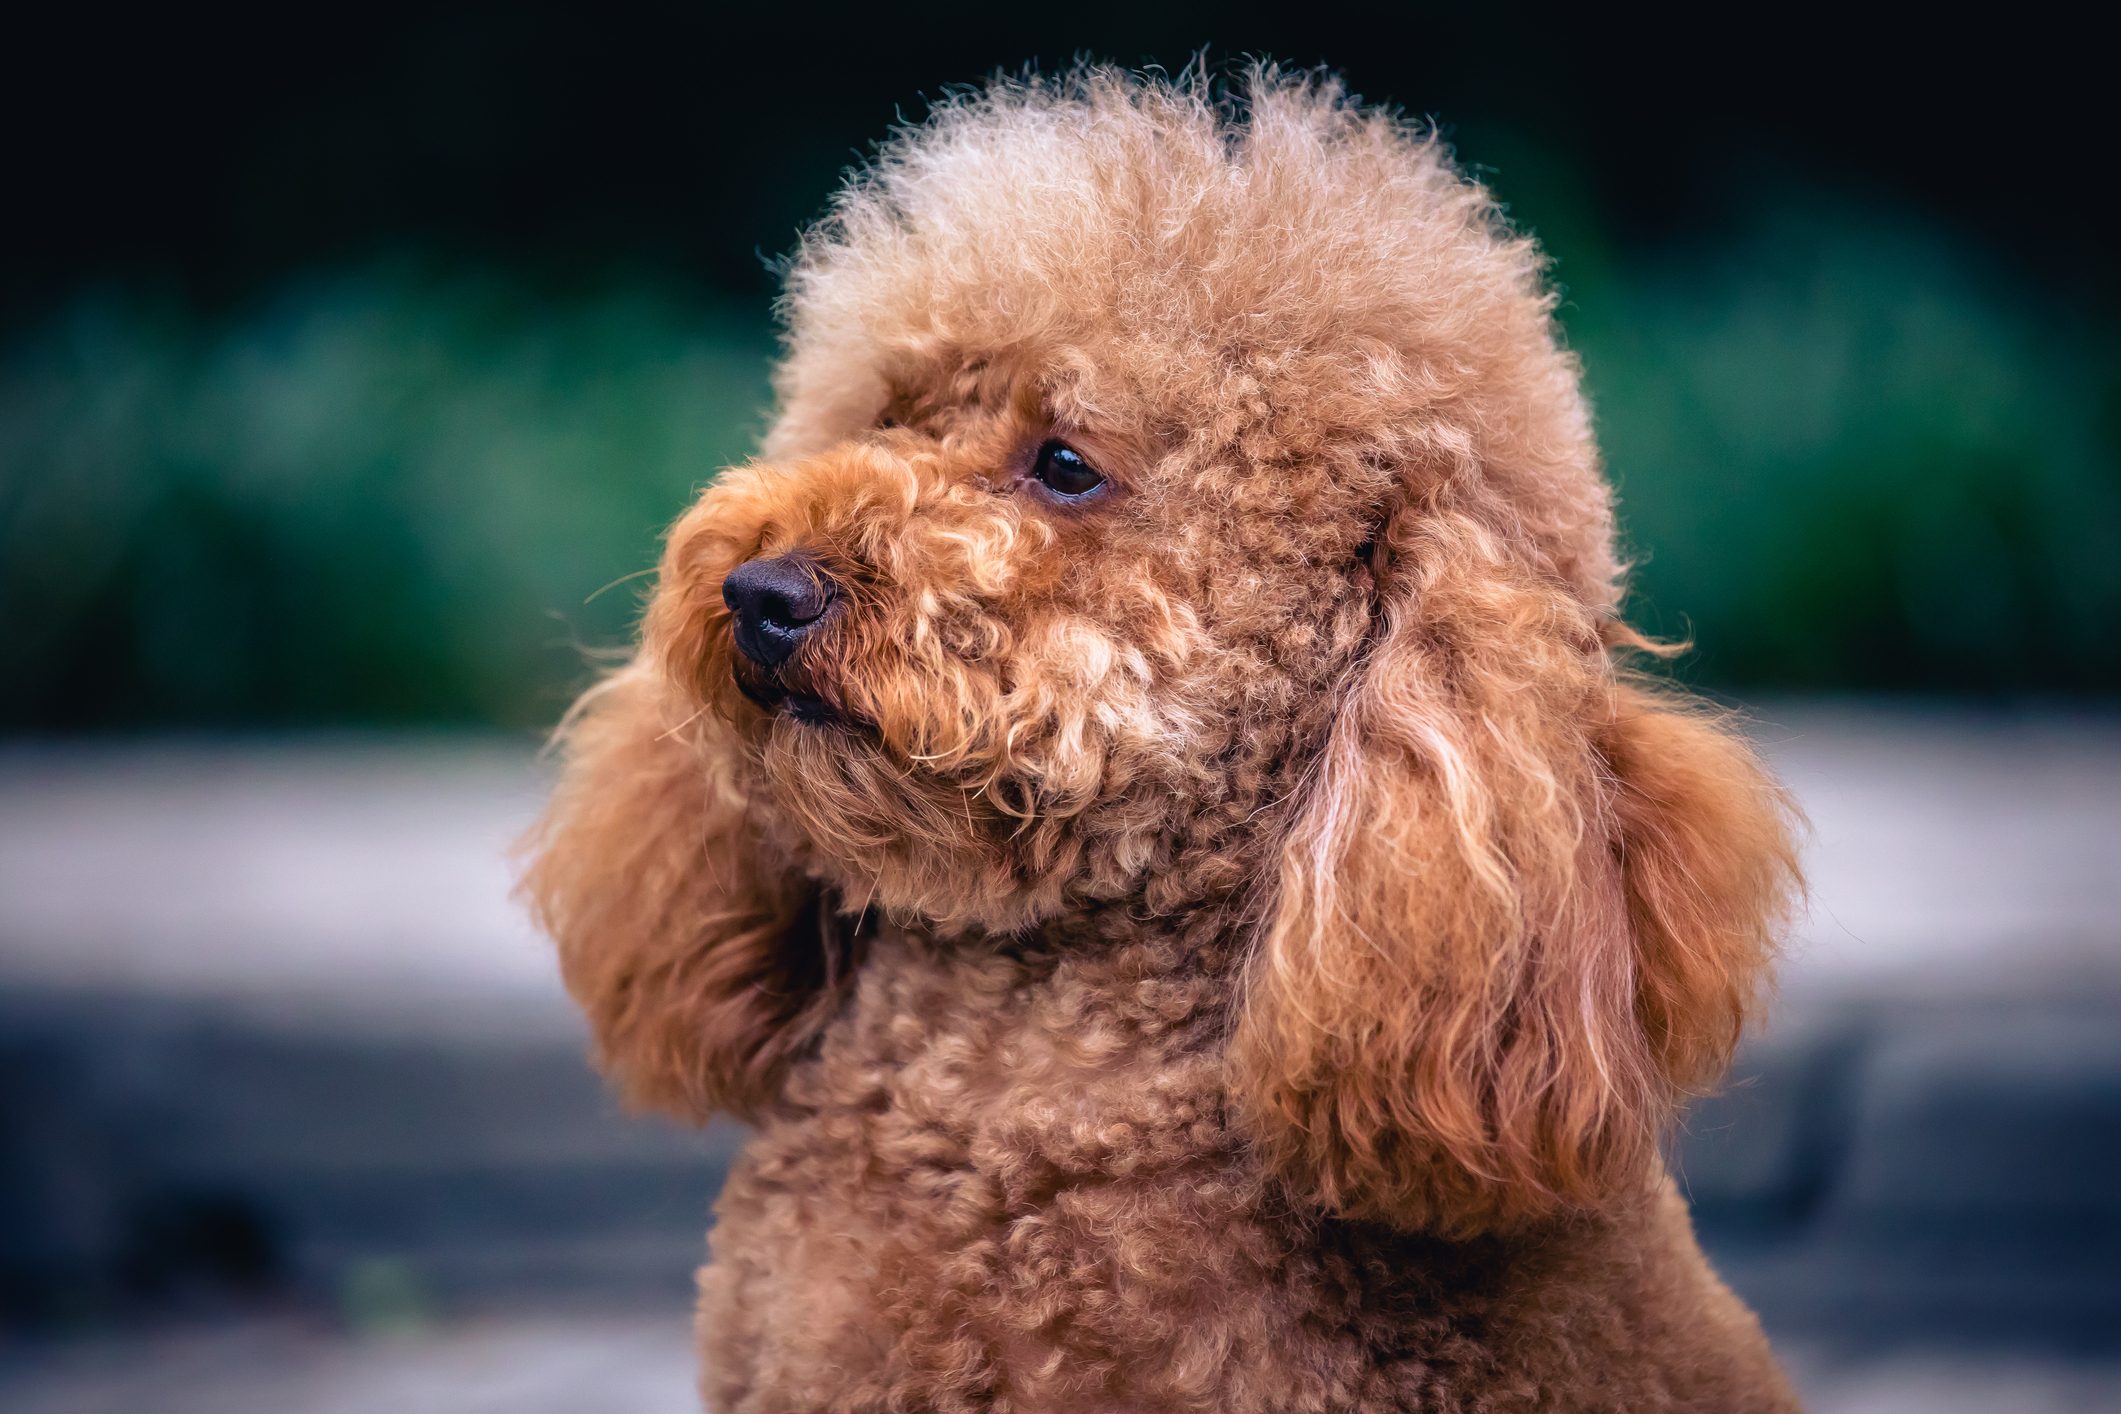 close up portrait of a cute brown Poodle dog .